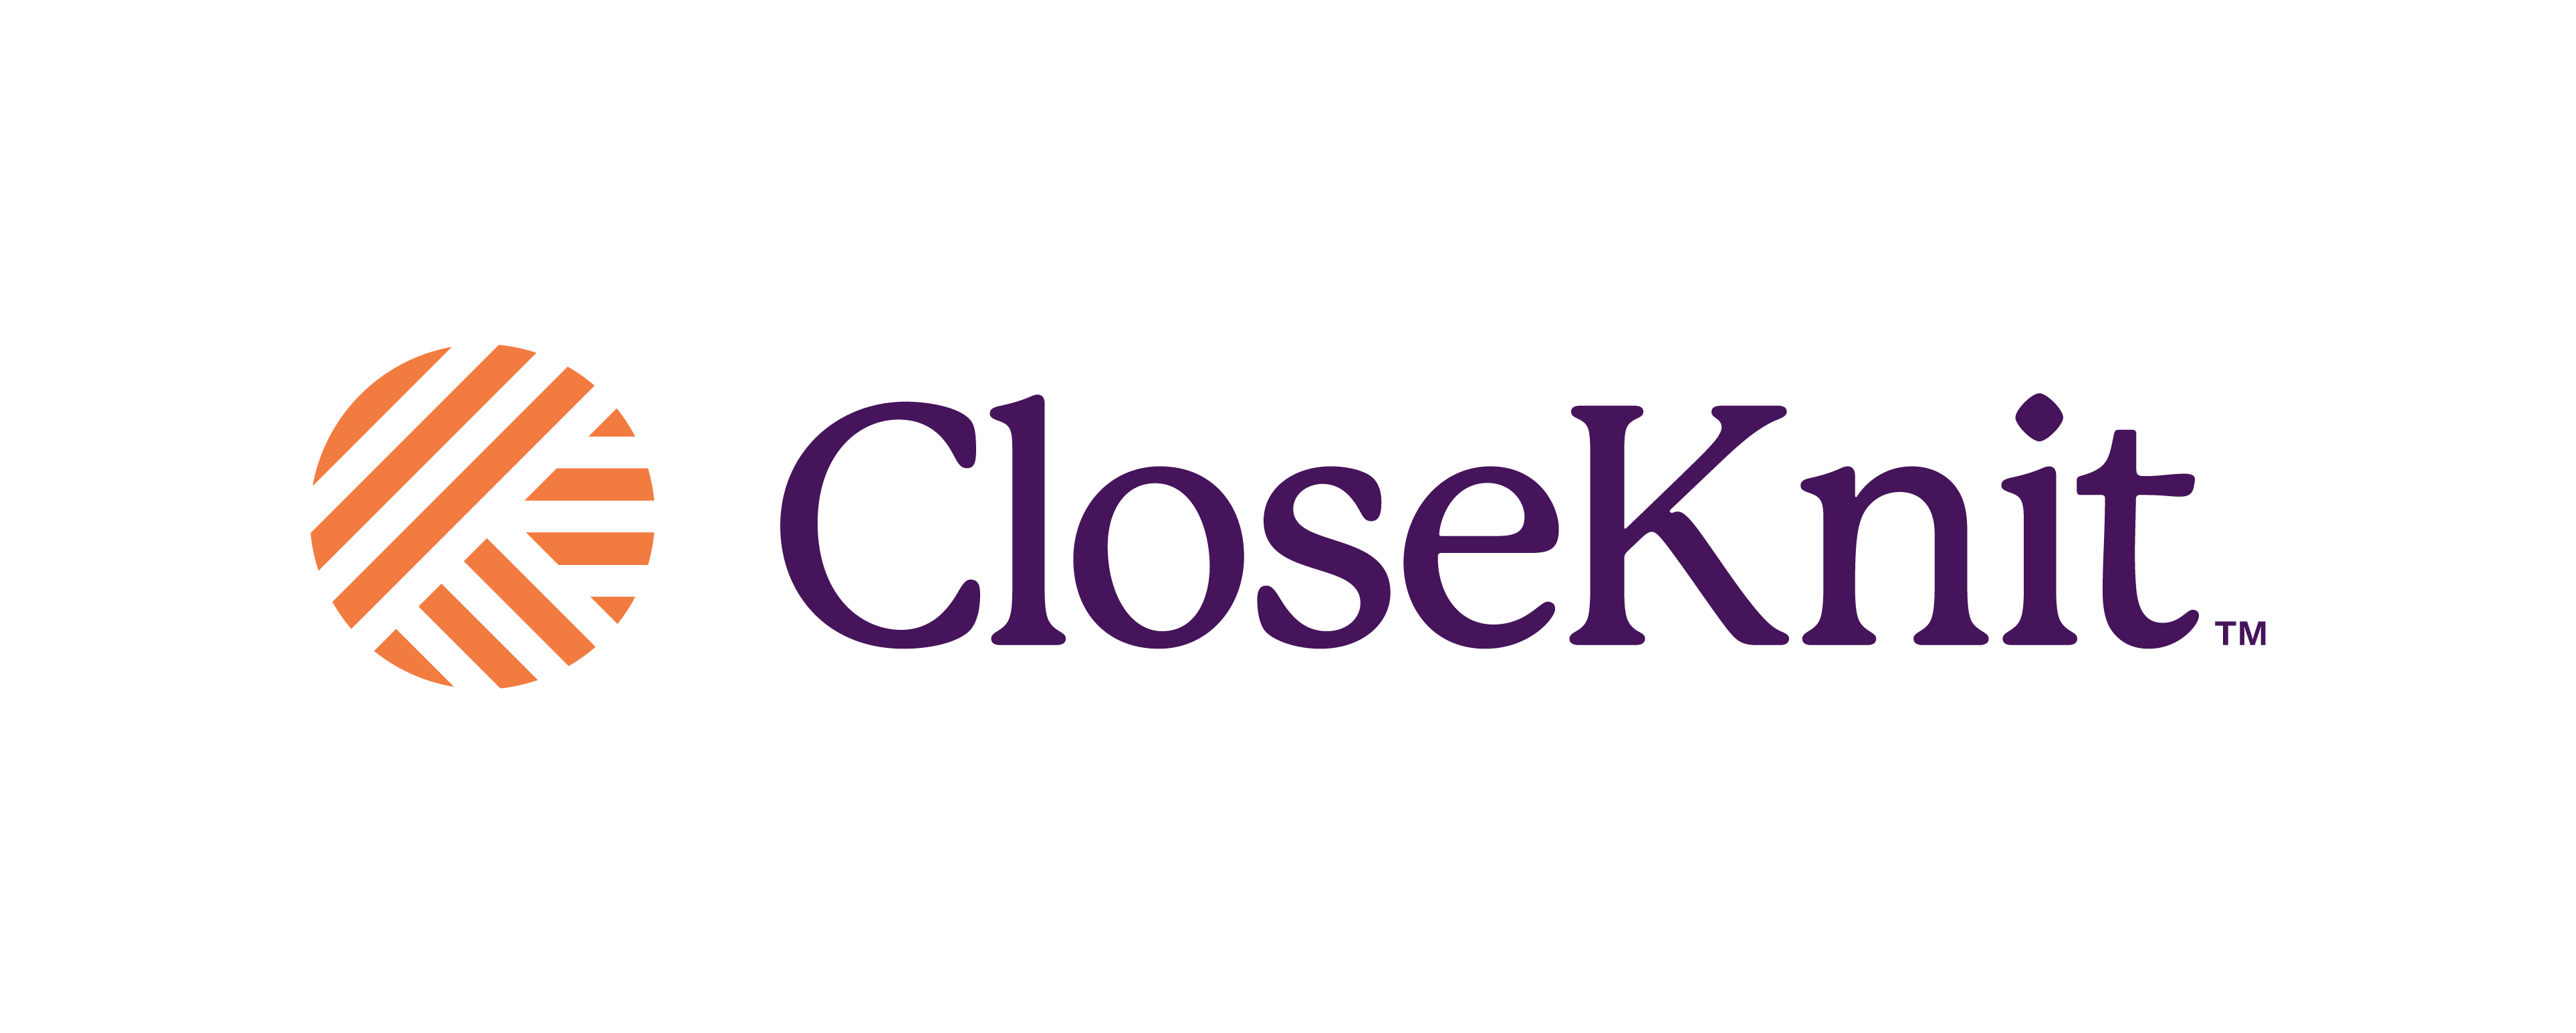 closeknit_logo_RGB_orange_purple